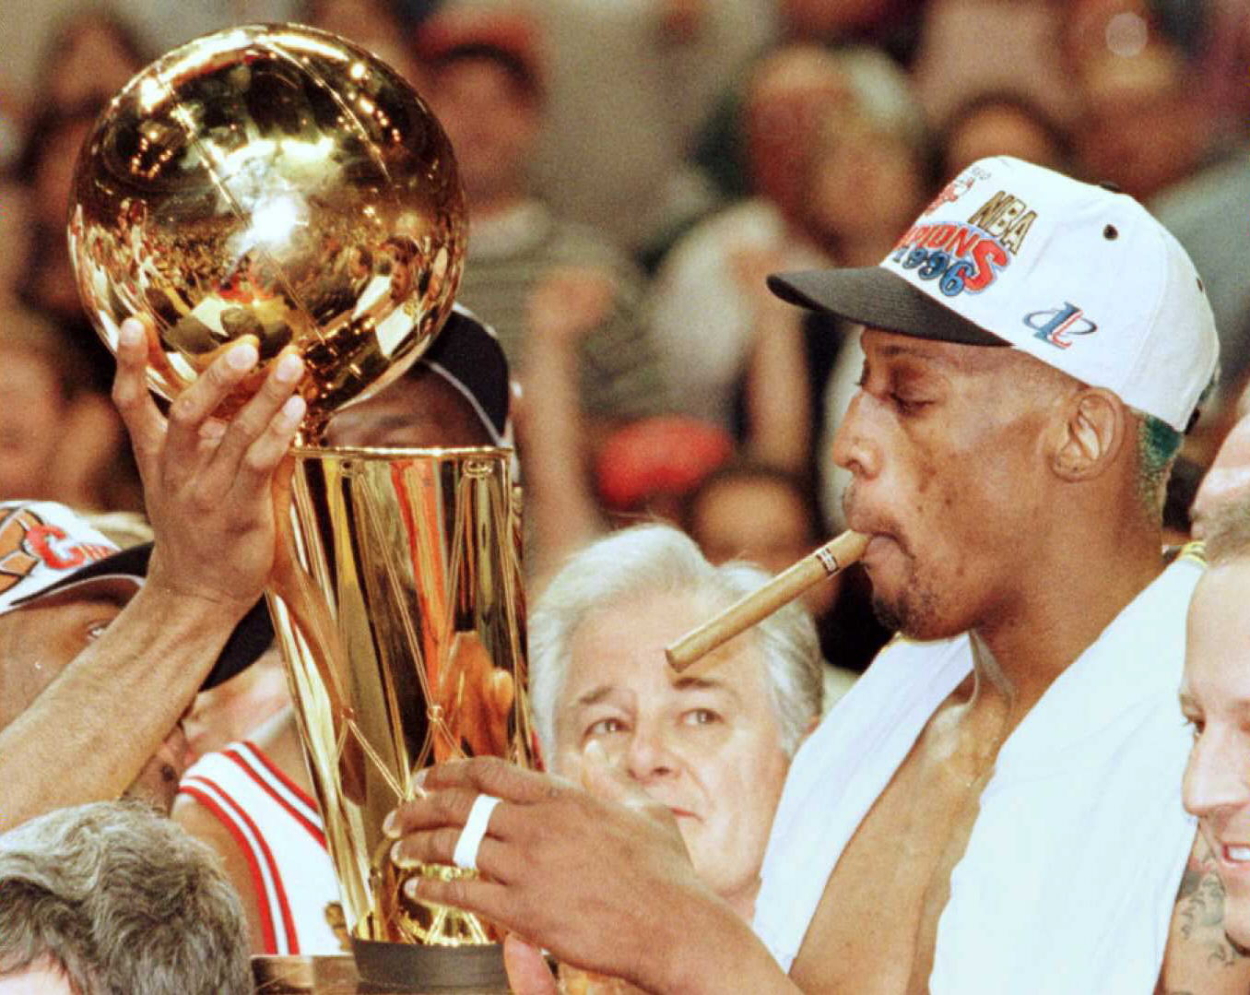 Dennis Rodman celebrating a Chicago Bulls championship in 1996.